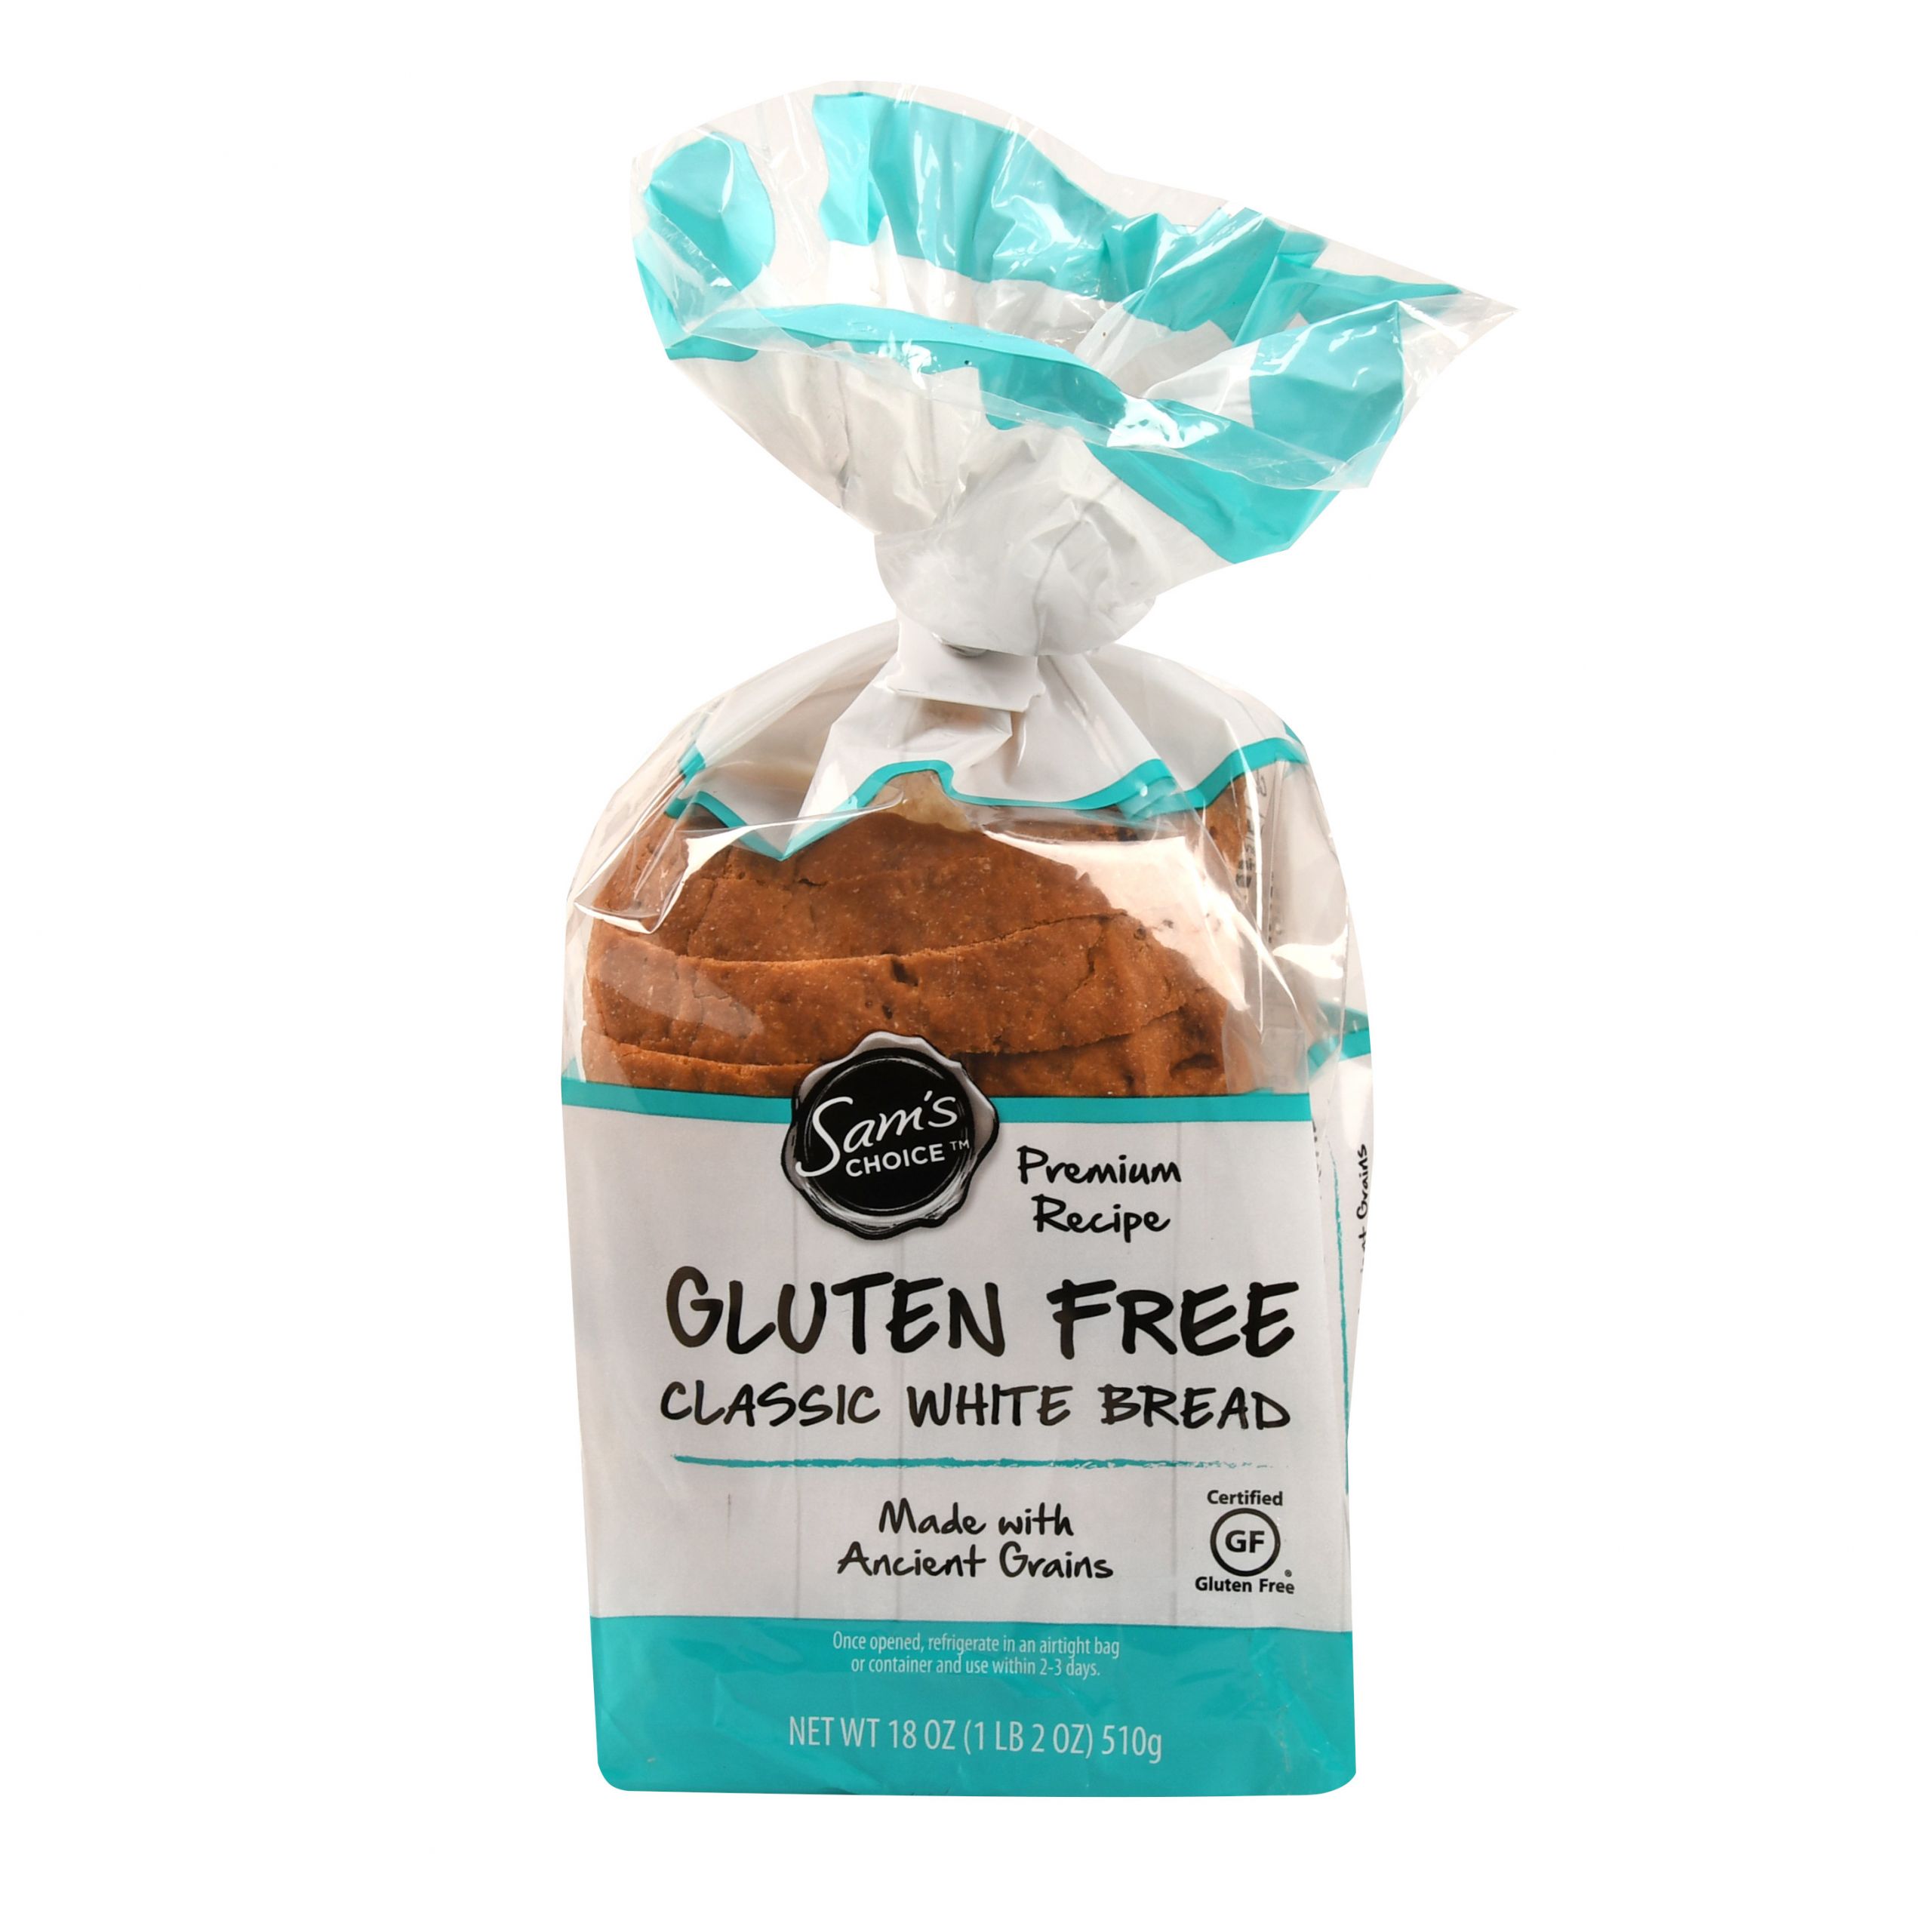 The 15 Best Ideas for Gluten Free Bread Brands at Walmart